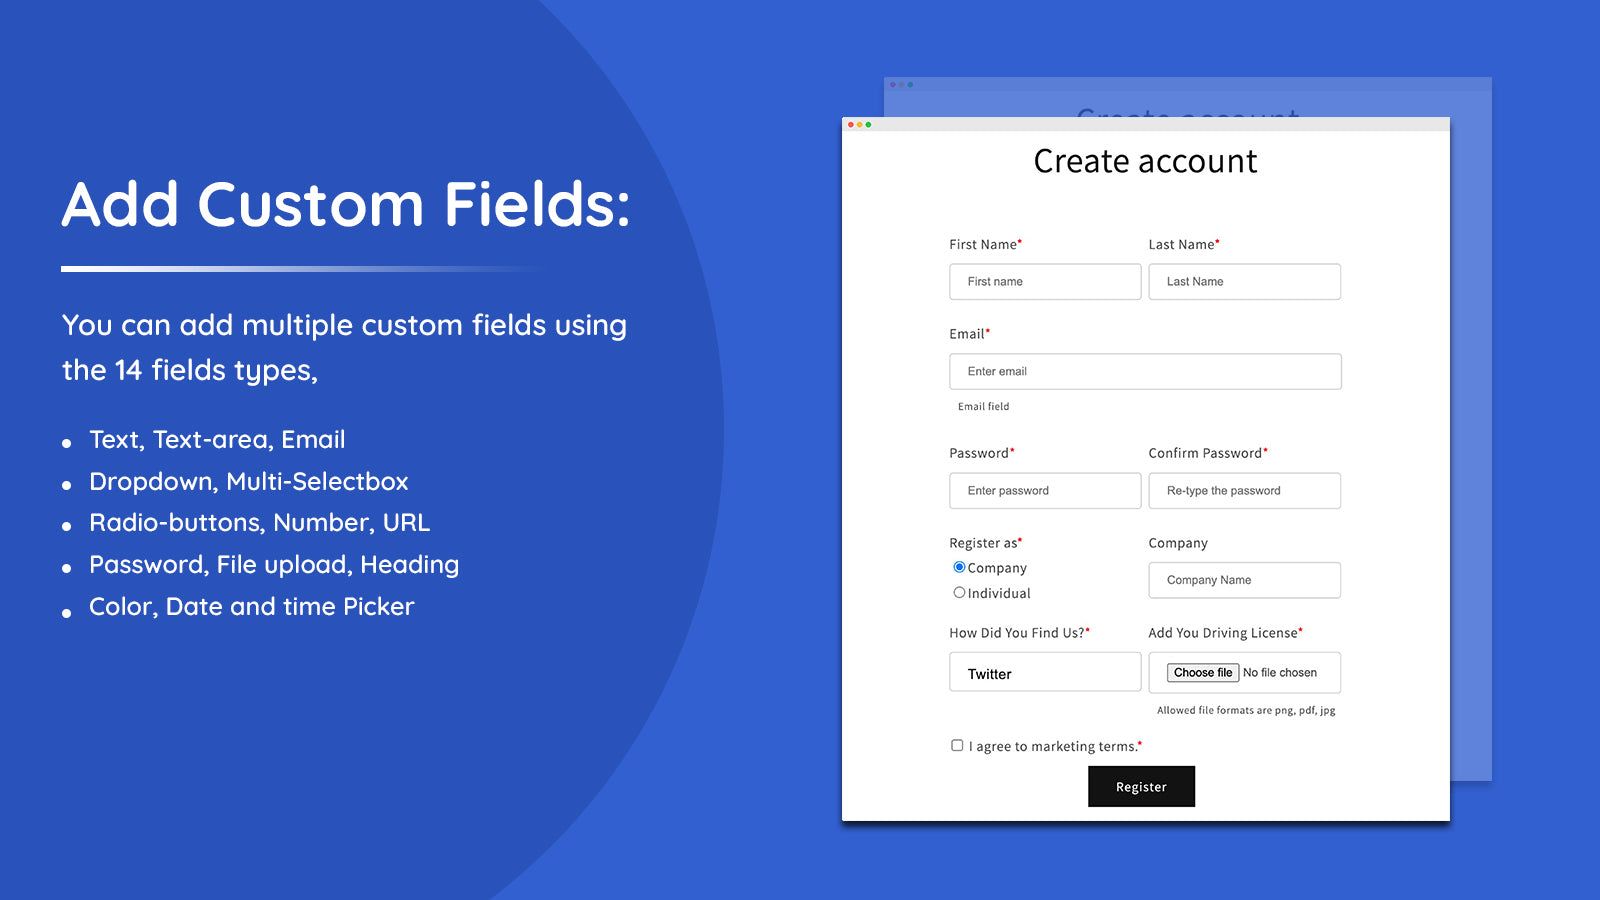 Add additional customer fields